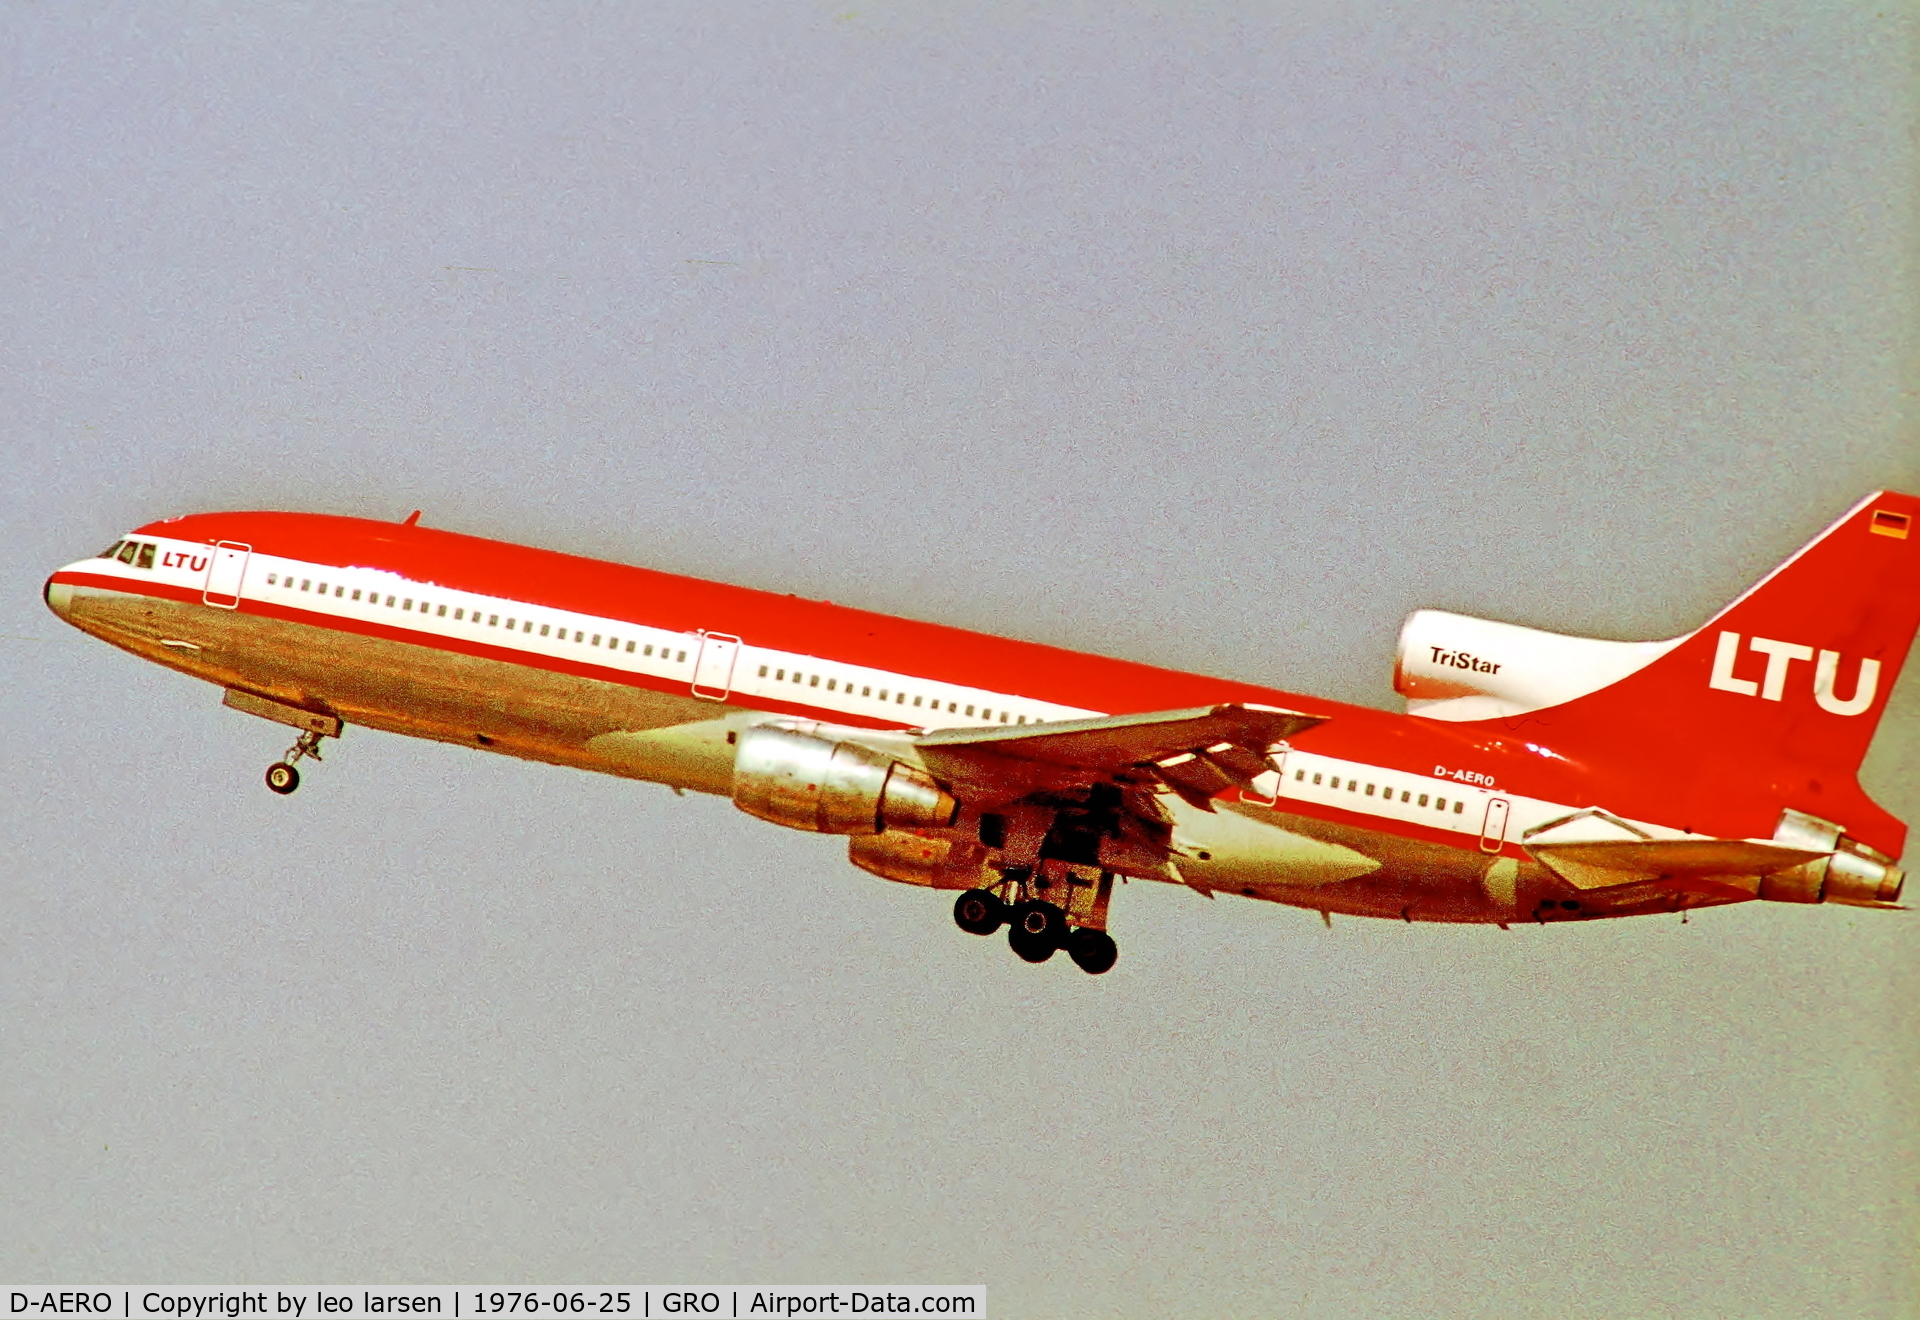 D-AERO, 1972 Lockheed L-1011-385-1 TriStar 1 C/N 193A-1008, Girona Spain 25.6.1976